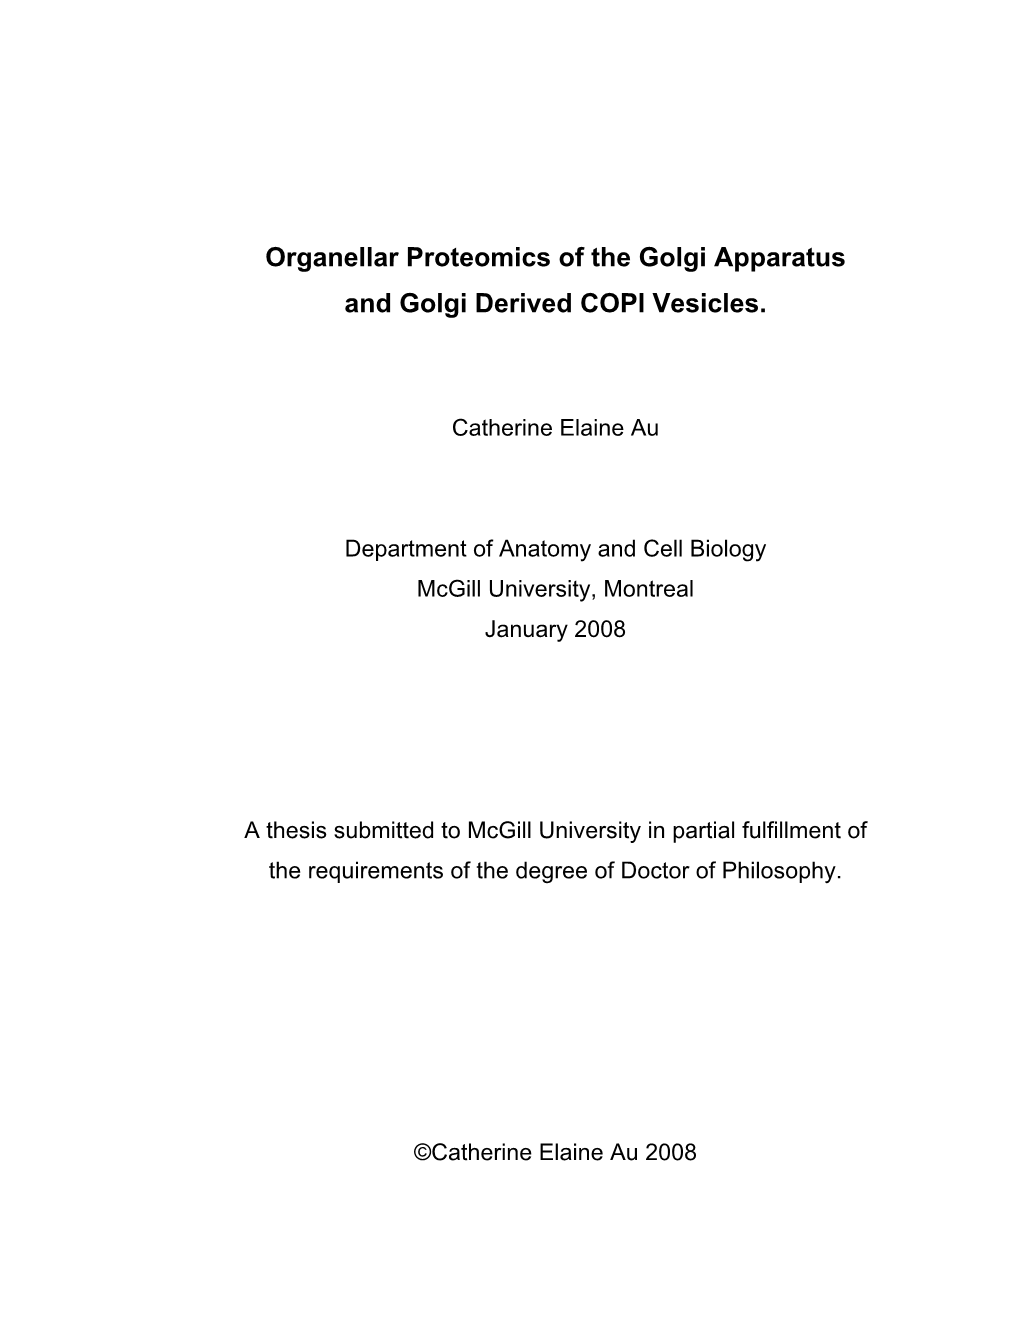 Organellar Proteomics of the Golgi Apparatus and Golgi Derived COPI Vesicles